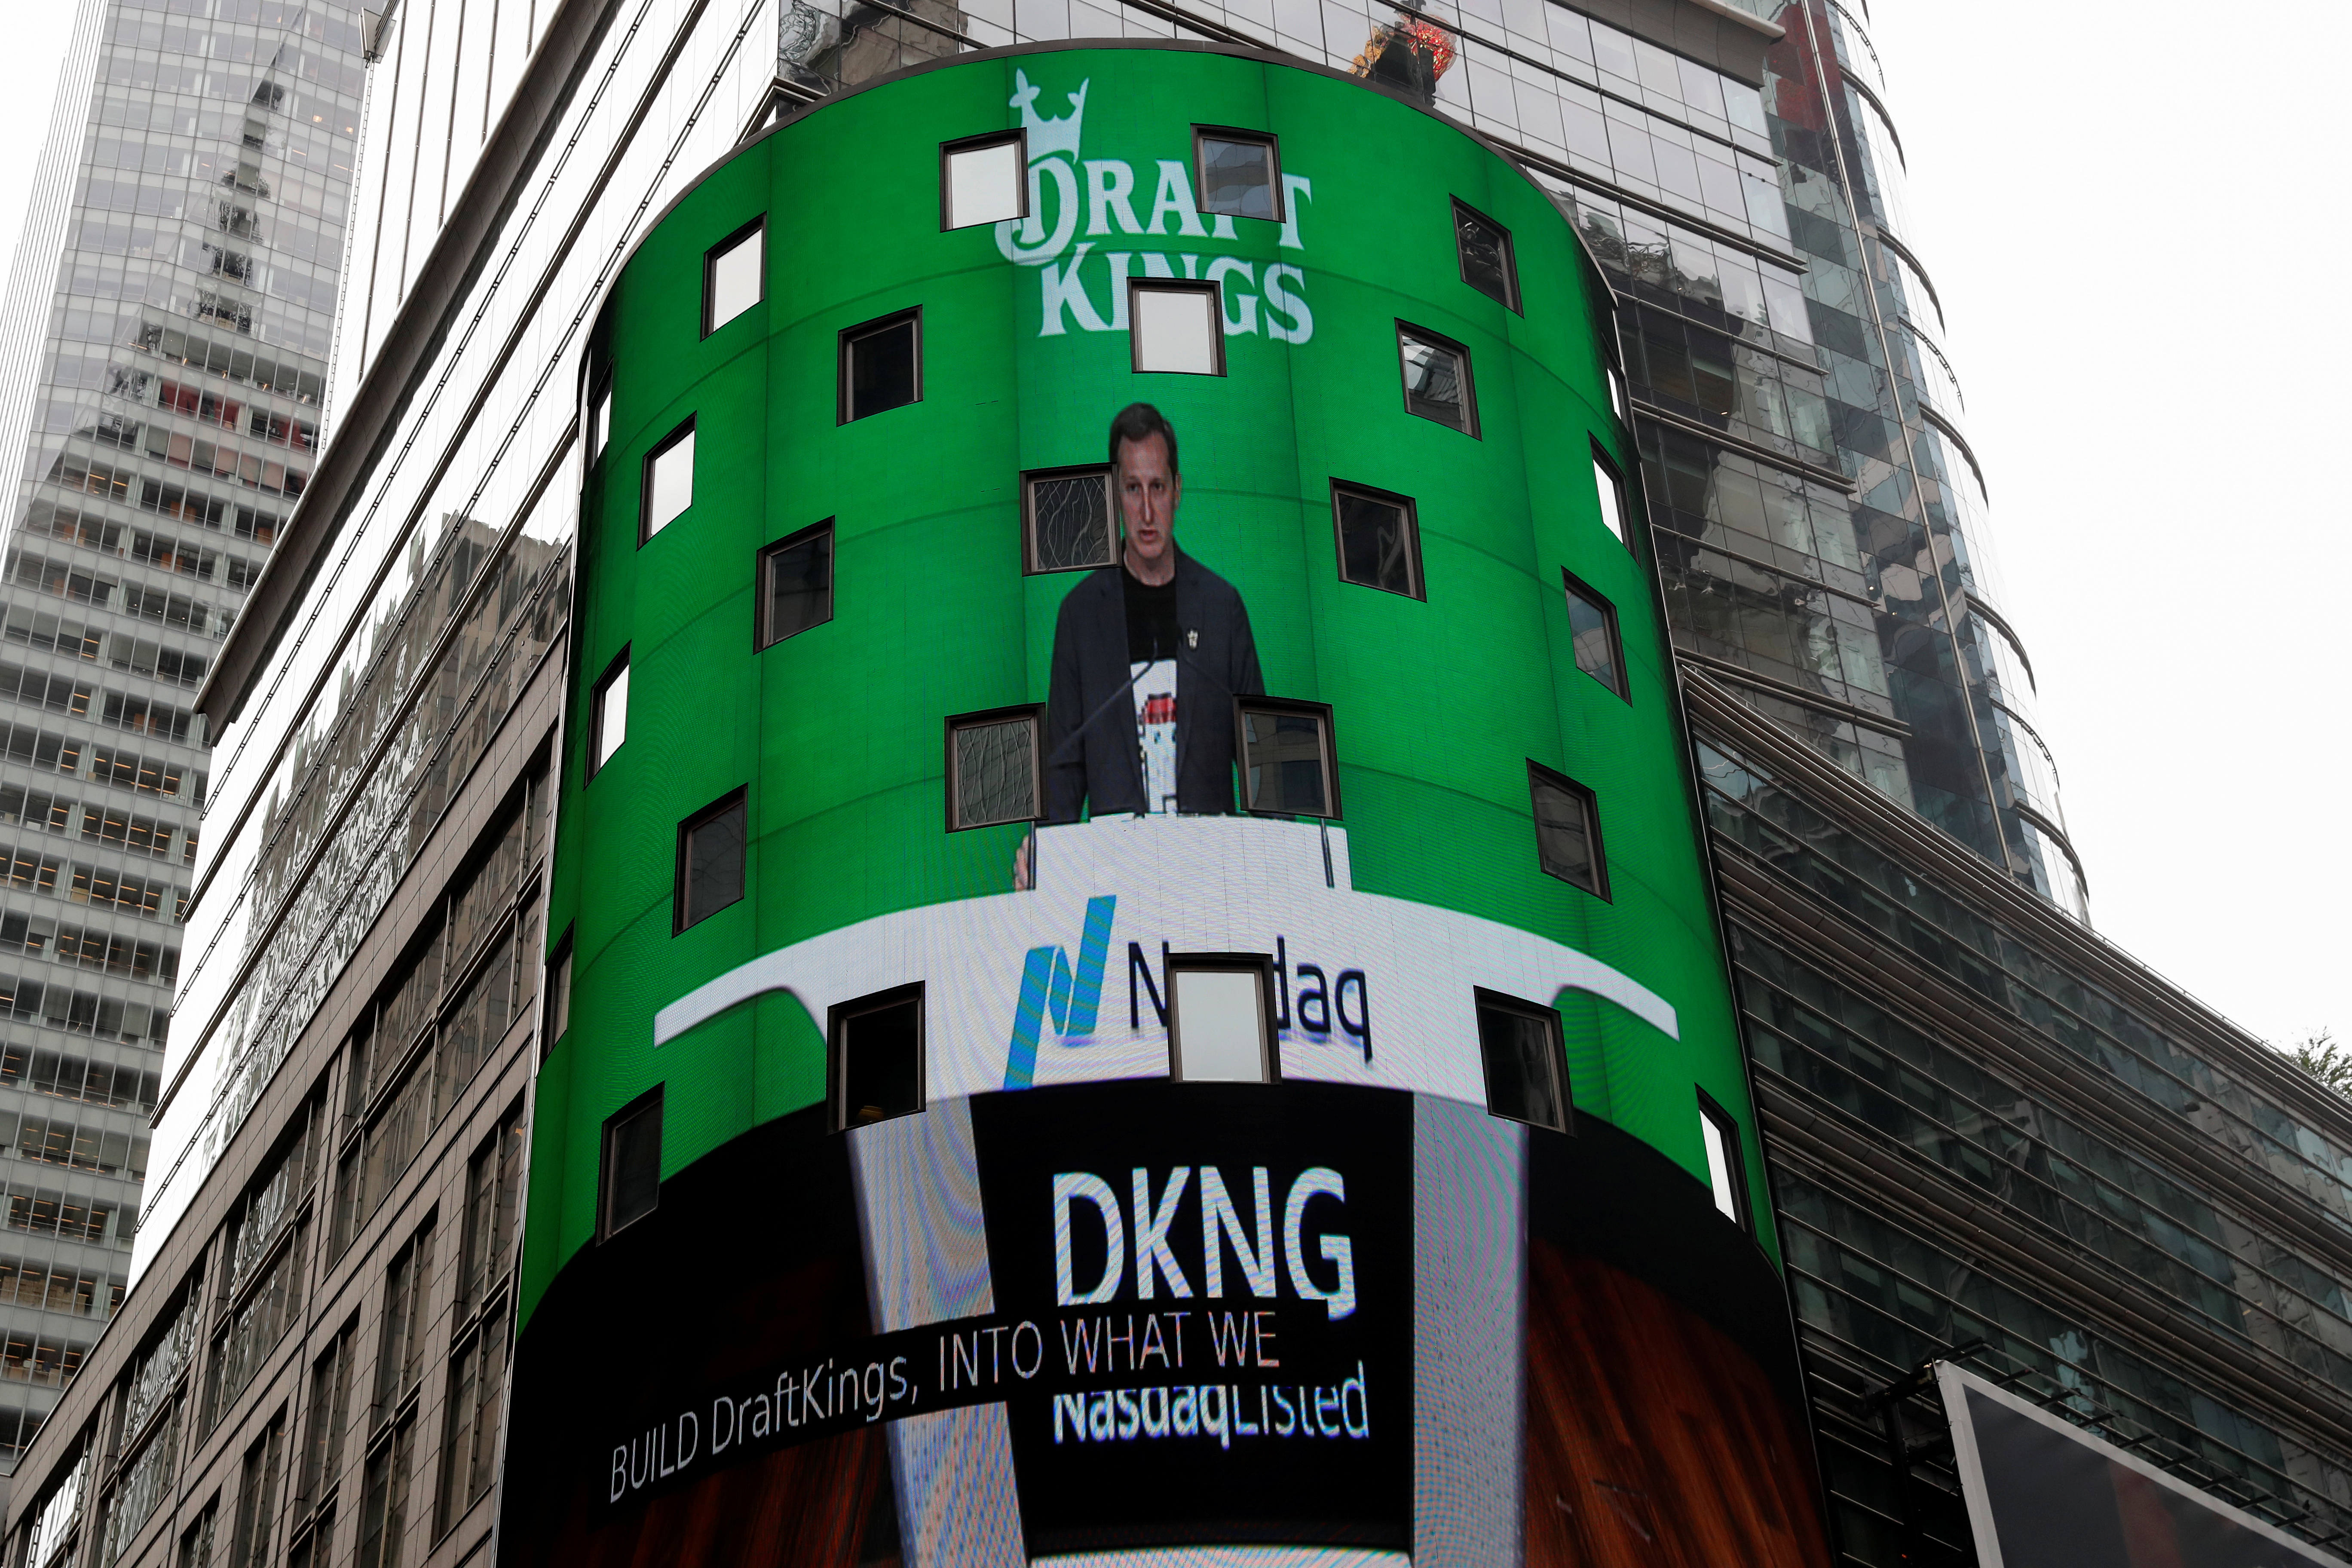 Jason Robins, CEO of DraftKings, is displayed at the Nasdaq MarketSite jumbotron, in New York City